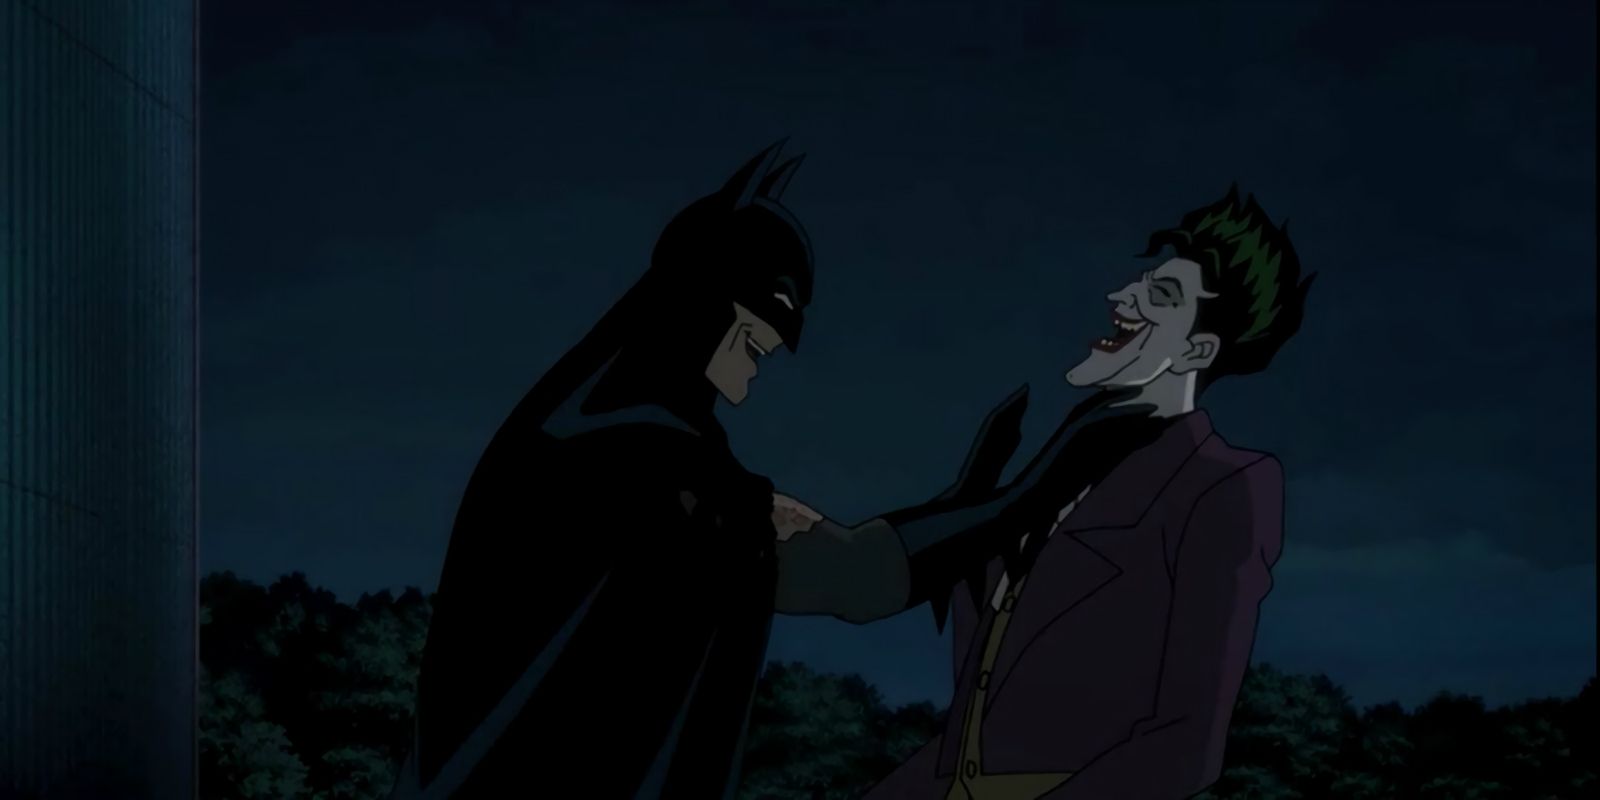 Batman laughing in The Killing Joke